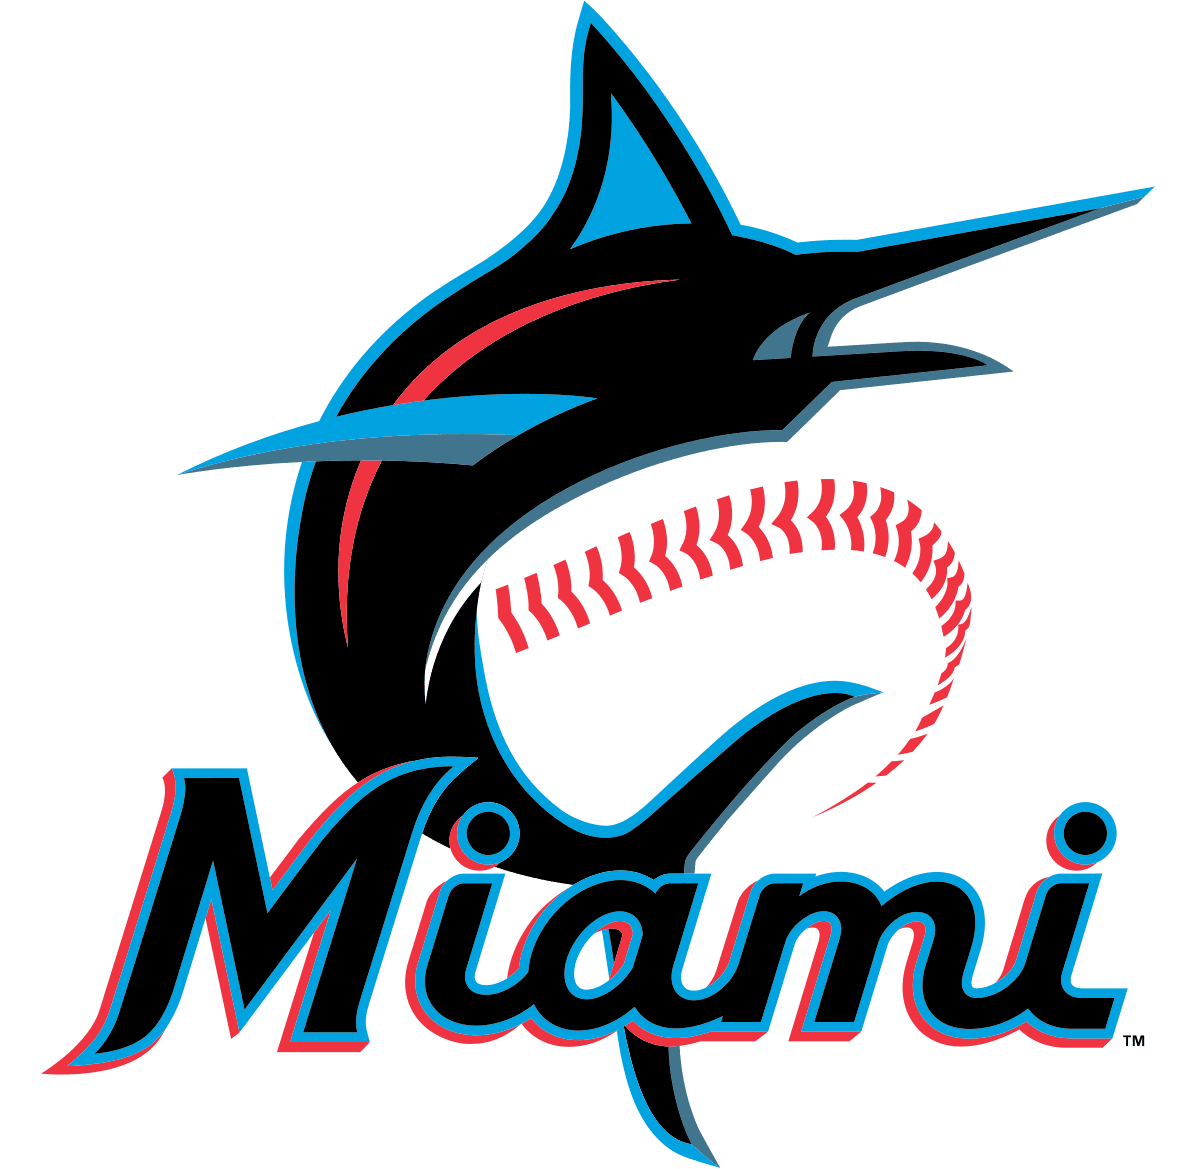 Miami Marlins 2020 Schedule